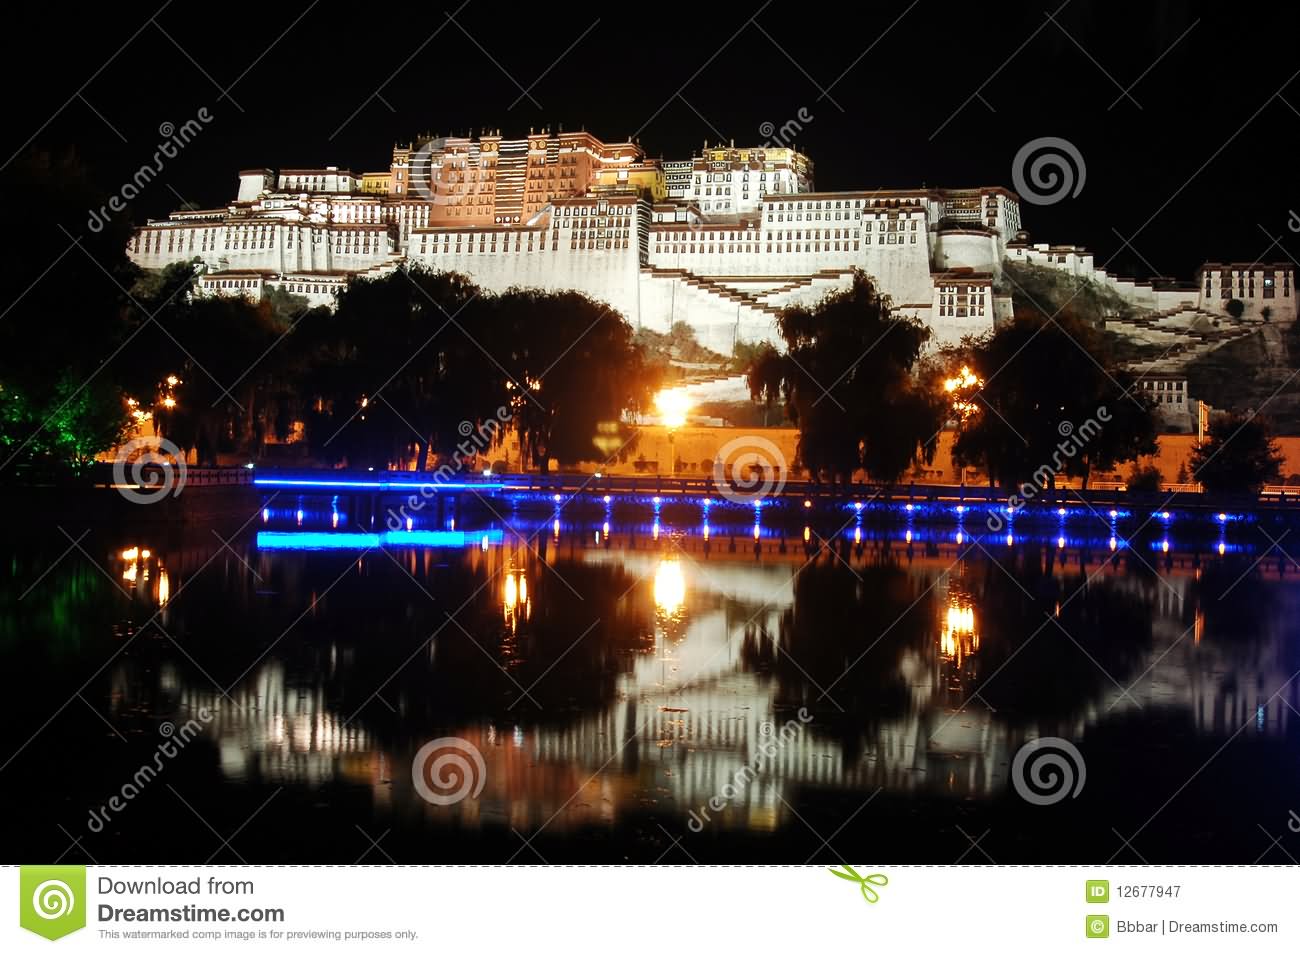 The Potala Palace Night Image